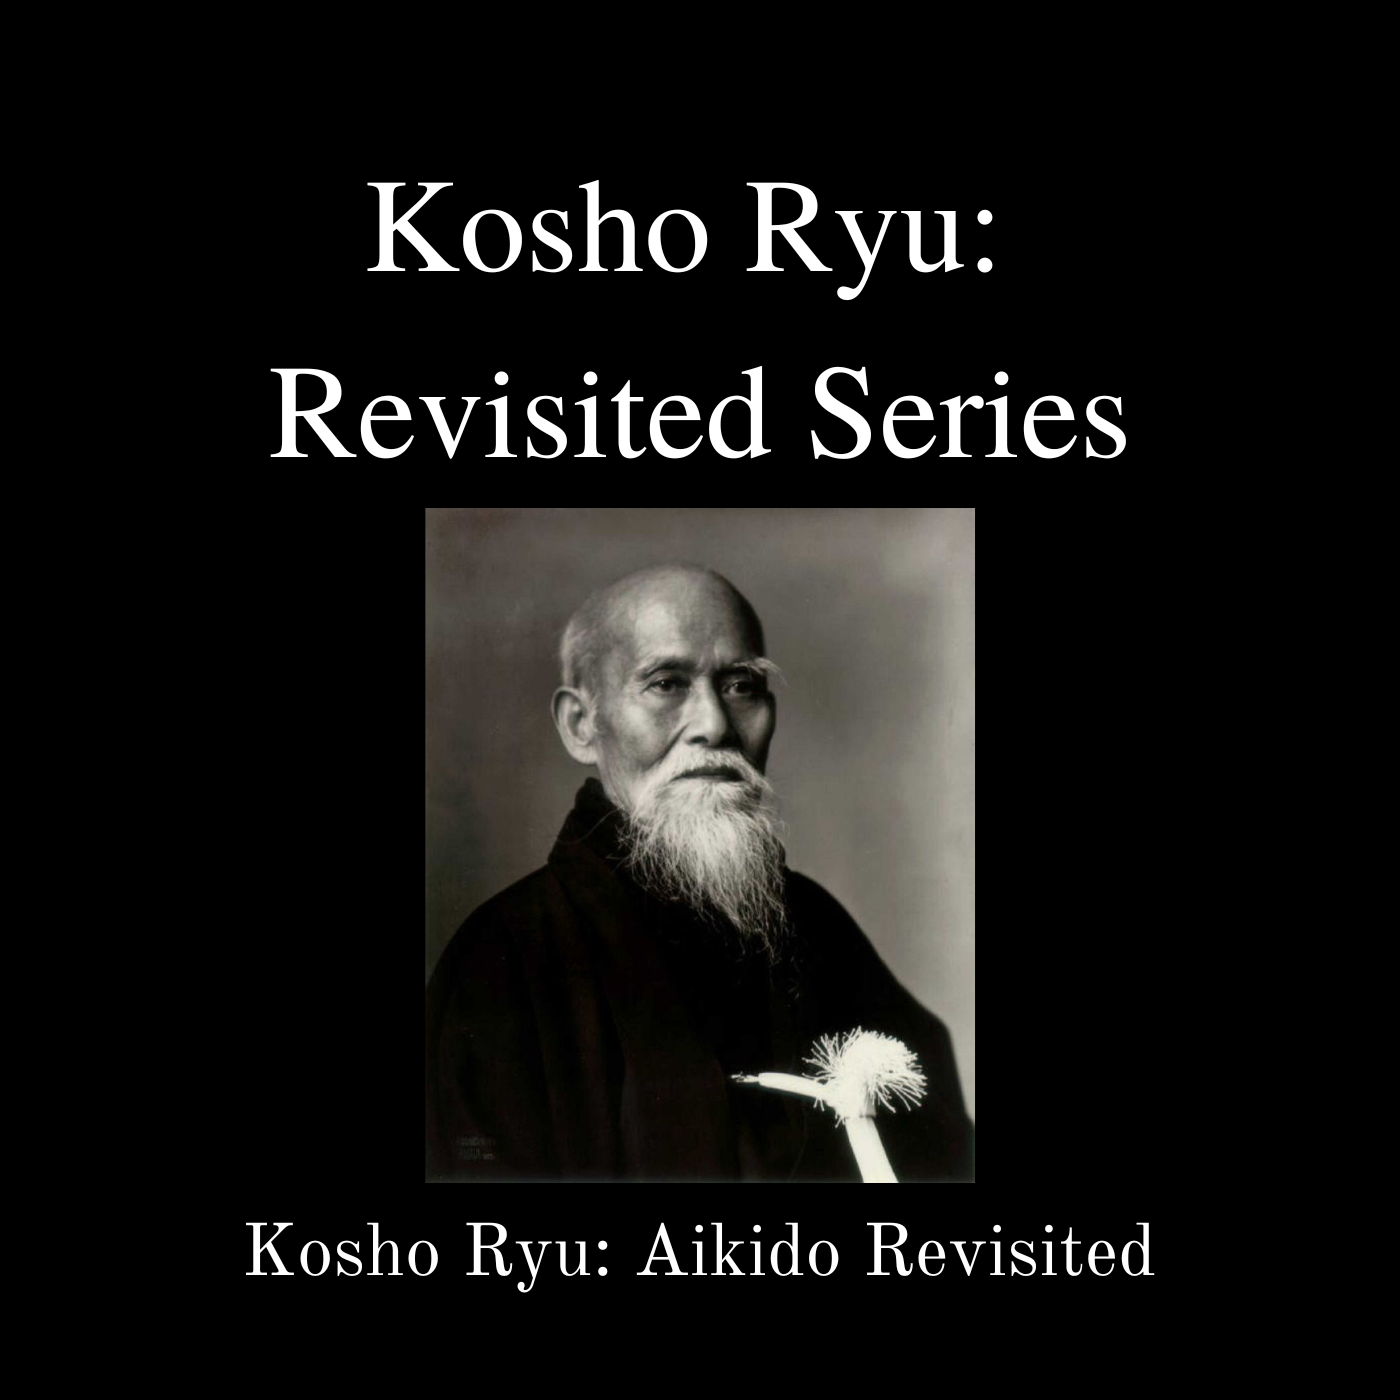 * Kosho Ryu: Aikido Revisited